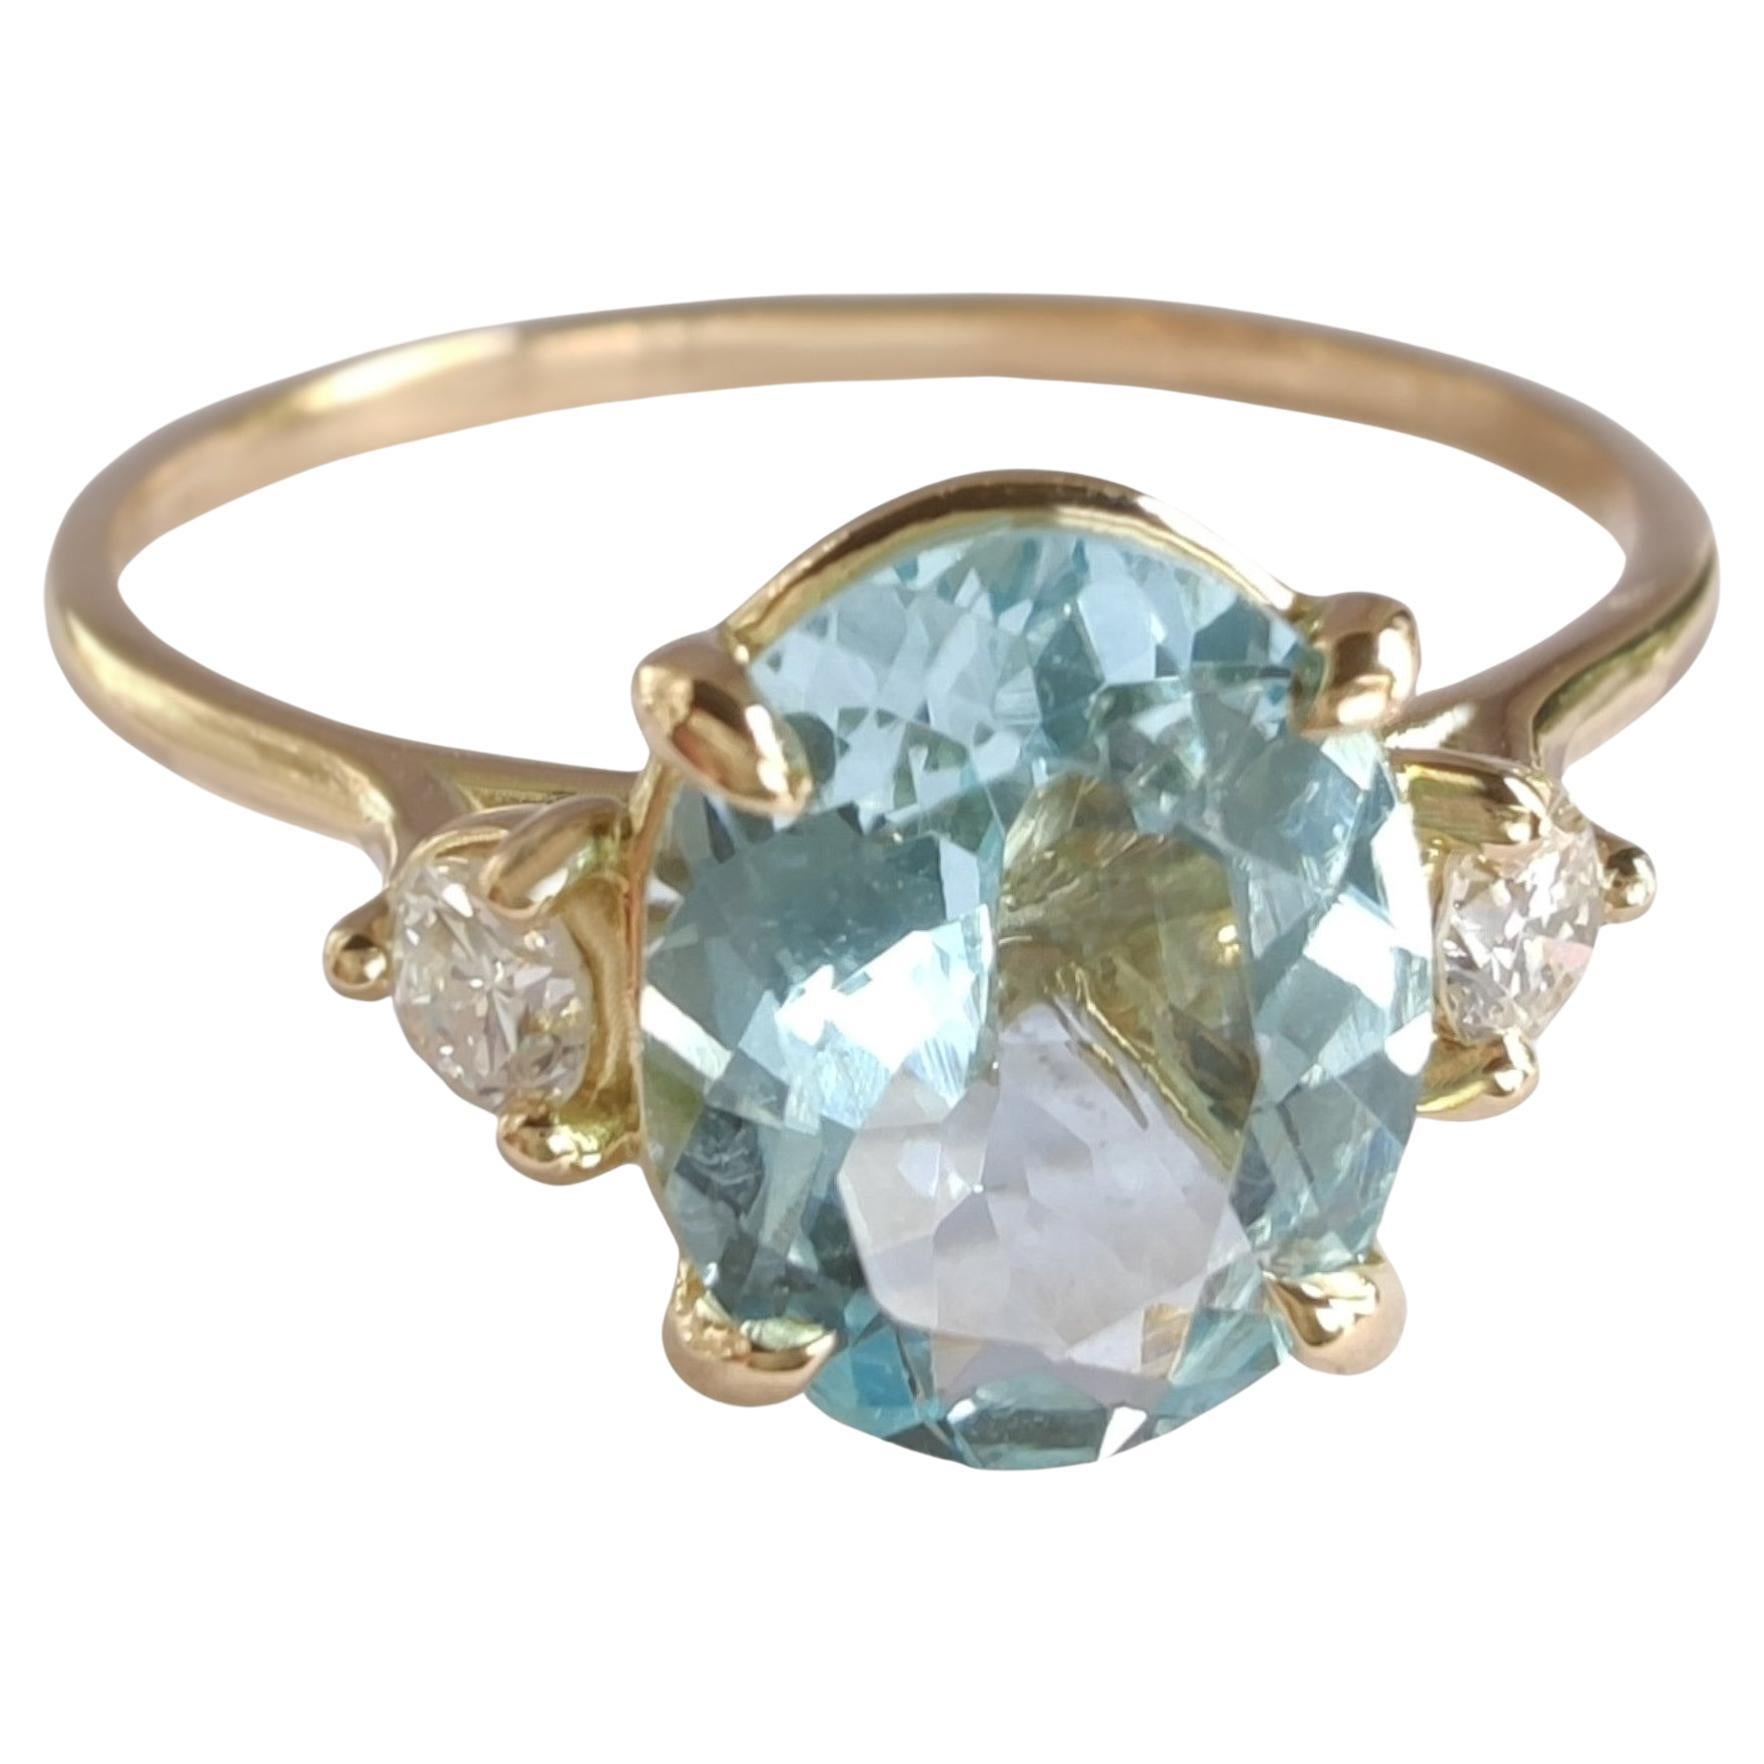 Flash sale -18K Gold Trilogy Ring: 1.36ct Oval Aquamarine & Diamonds